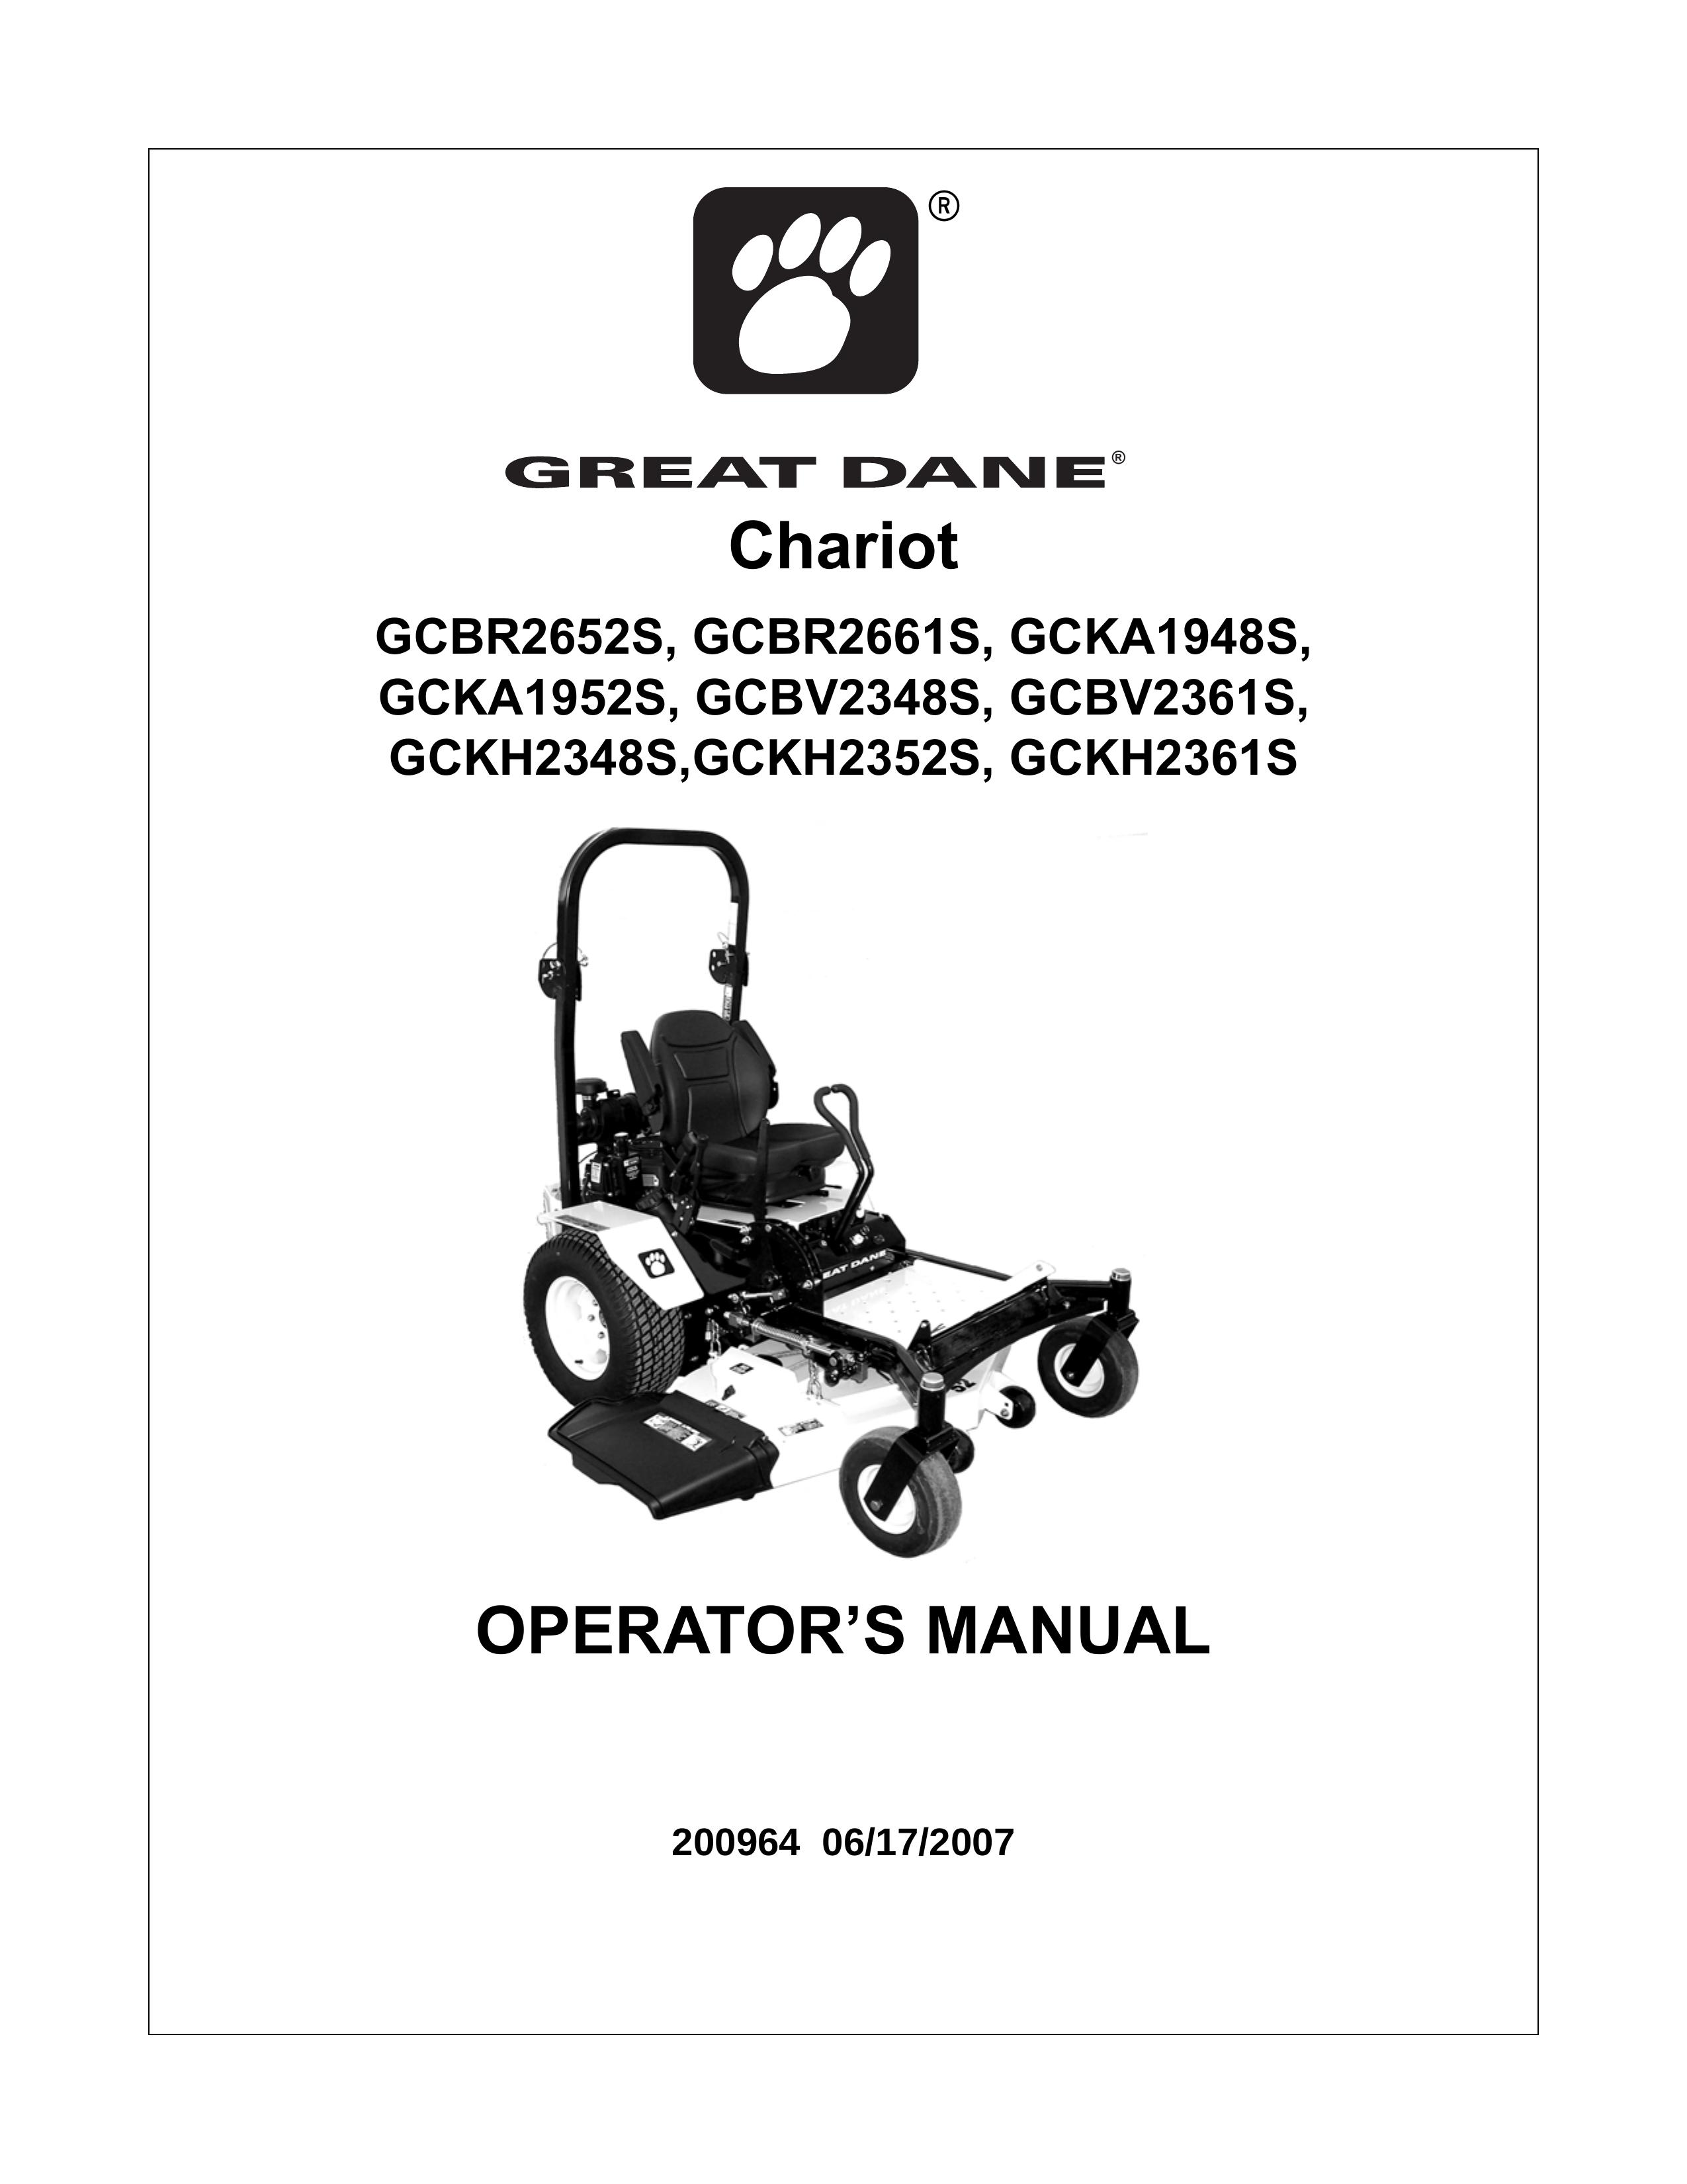 Great Dane GCBV2361S Lawn Mower User Manual